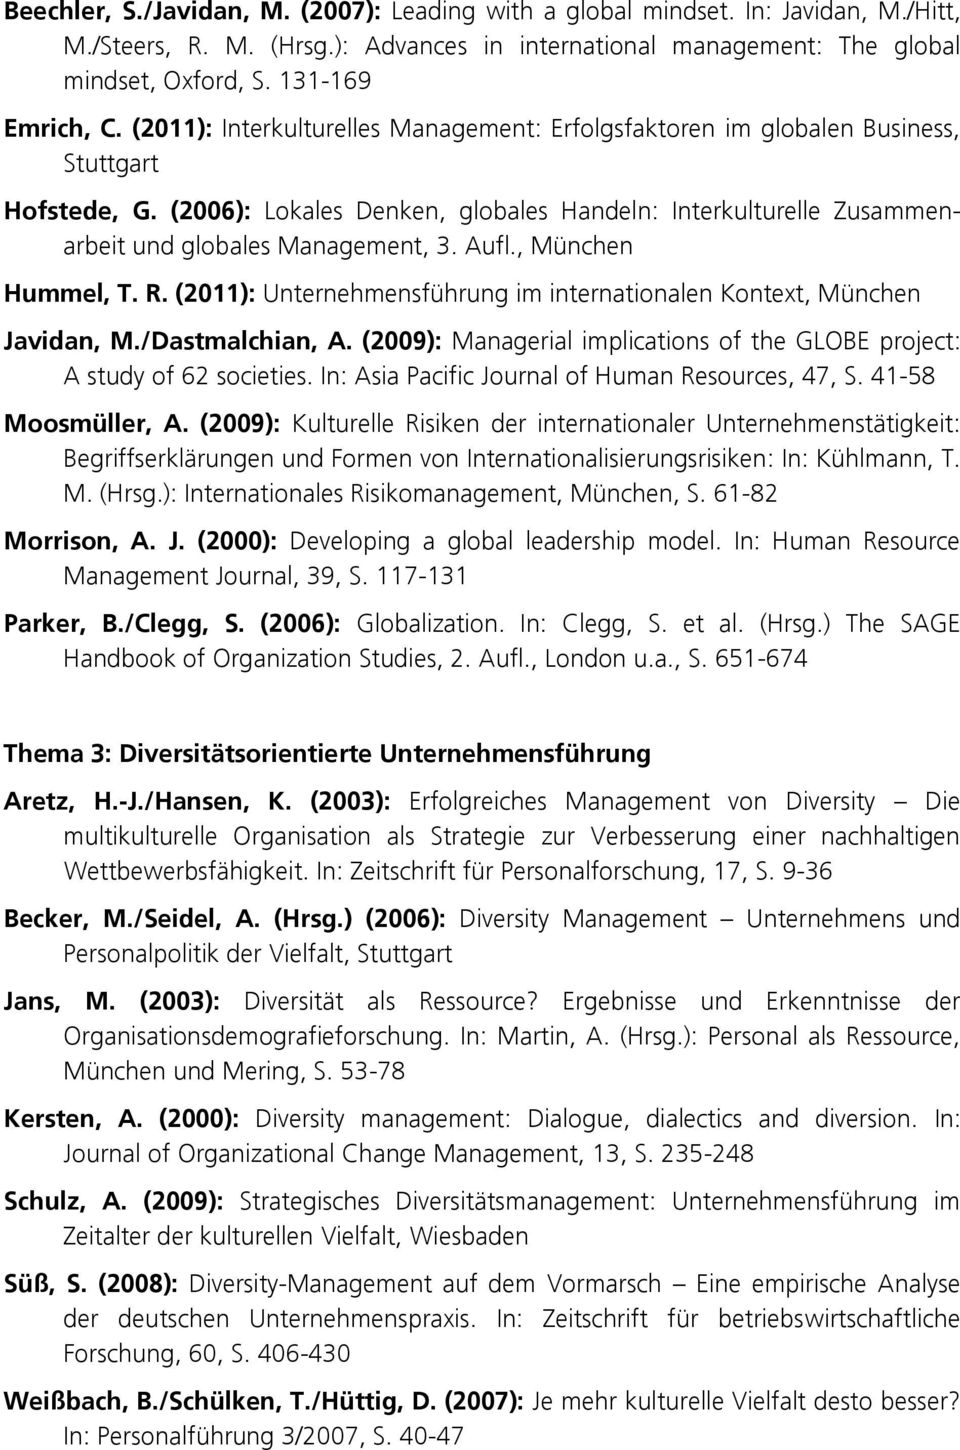 Aufl., München Hummel, T. R. (2011): Unternehmensführung im internationalen Kontext, München Javidan, M./Dastmalchian, A. (2009): Managerial implications of the GLOBE project: A study of 62 societies.